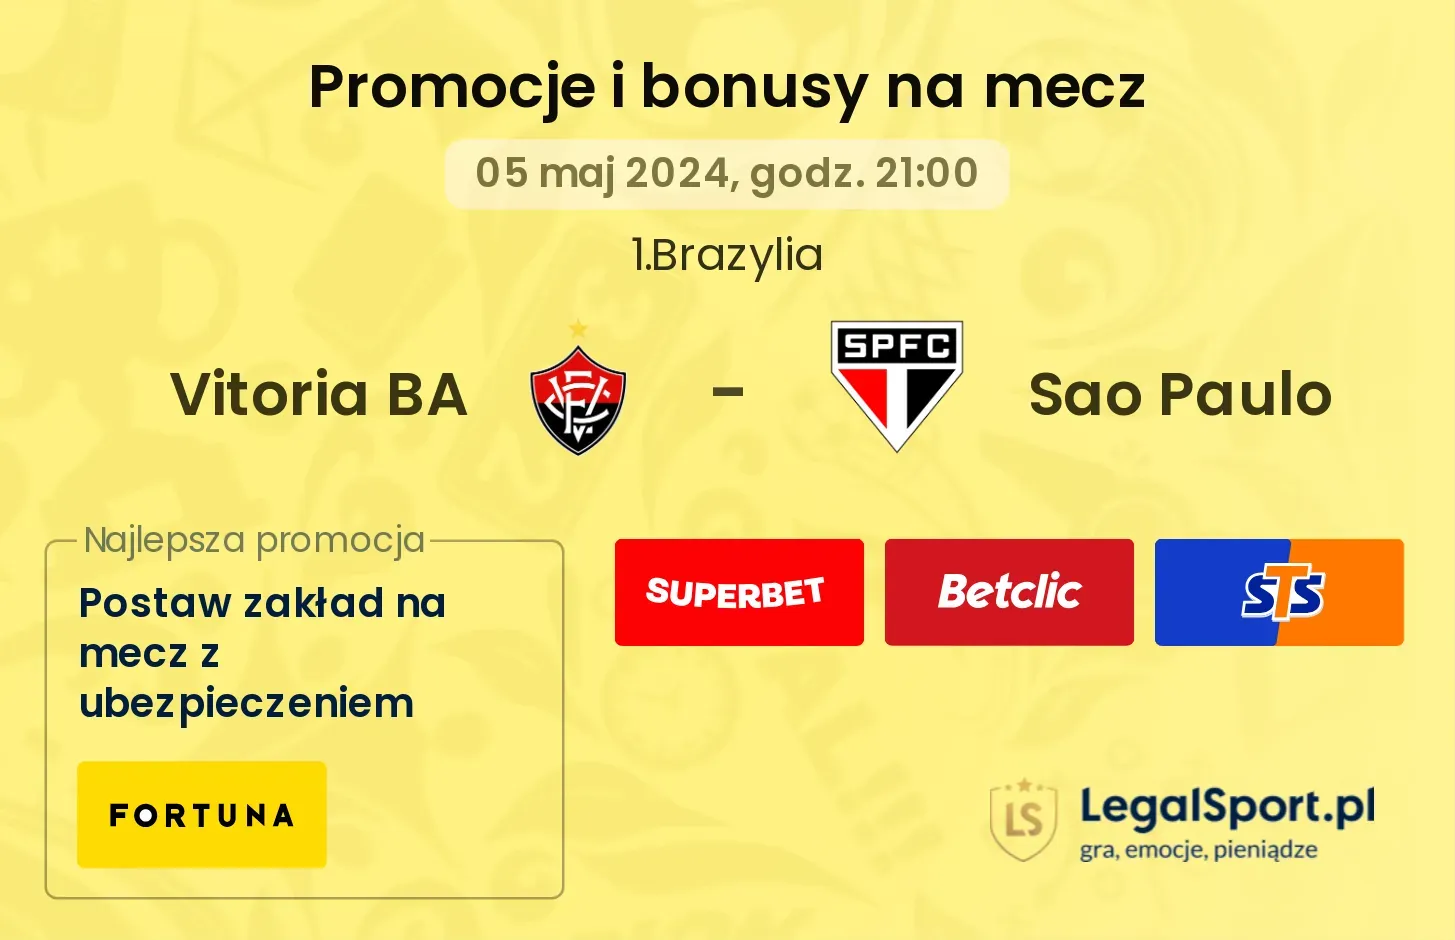 Vitoria BA - Sao Paulo promocje bonusy na mecz